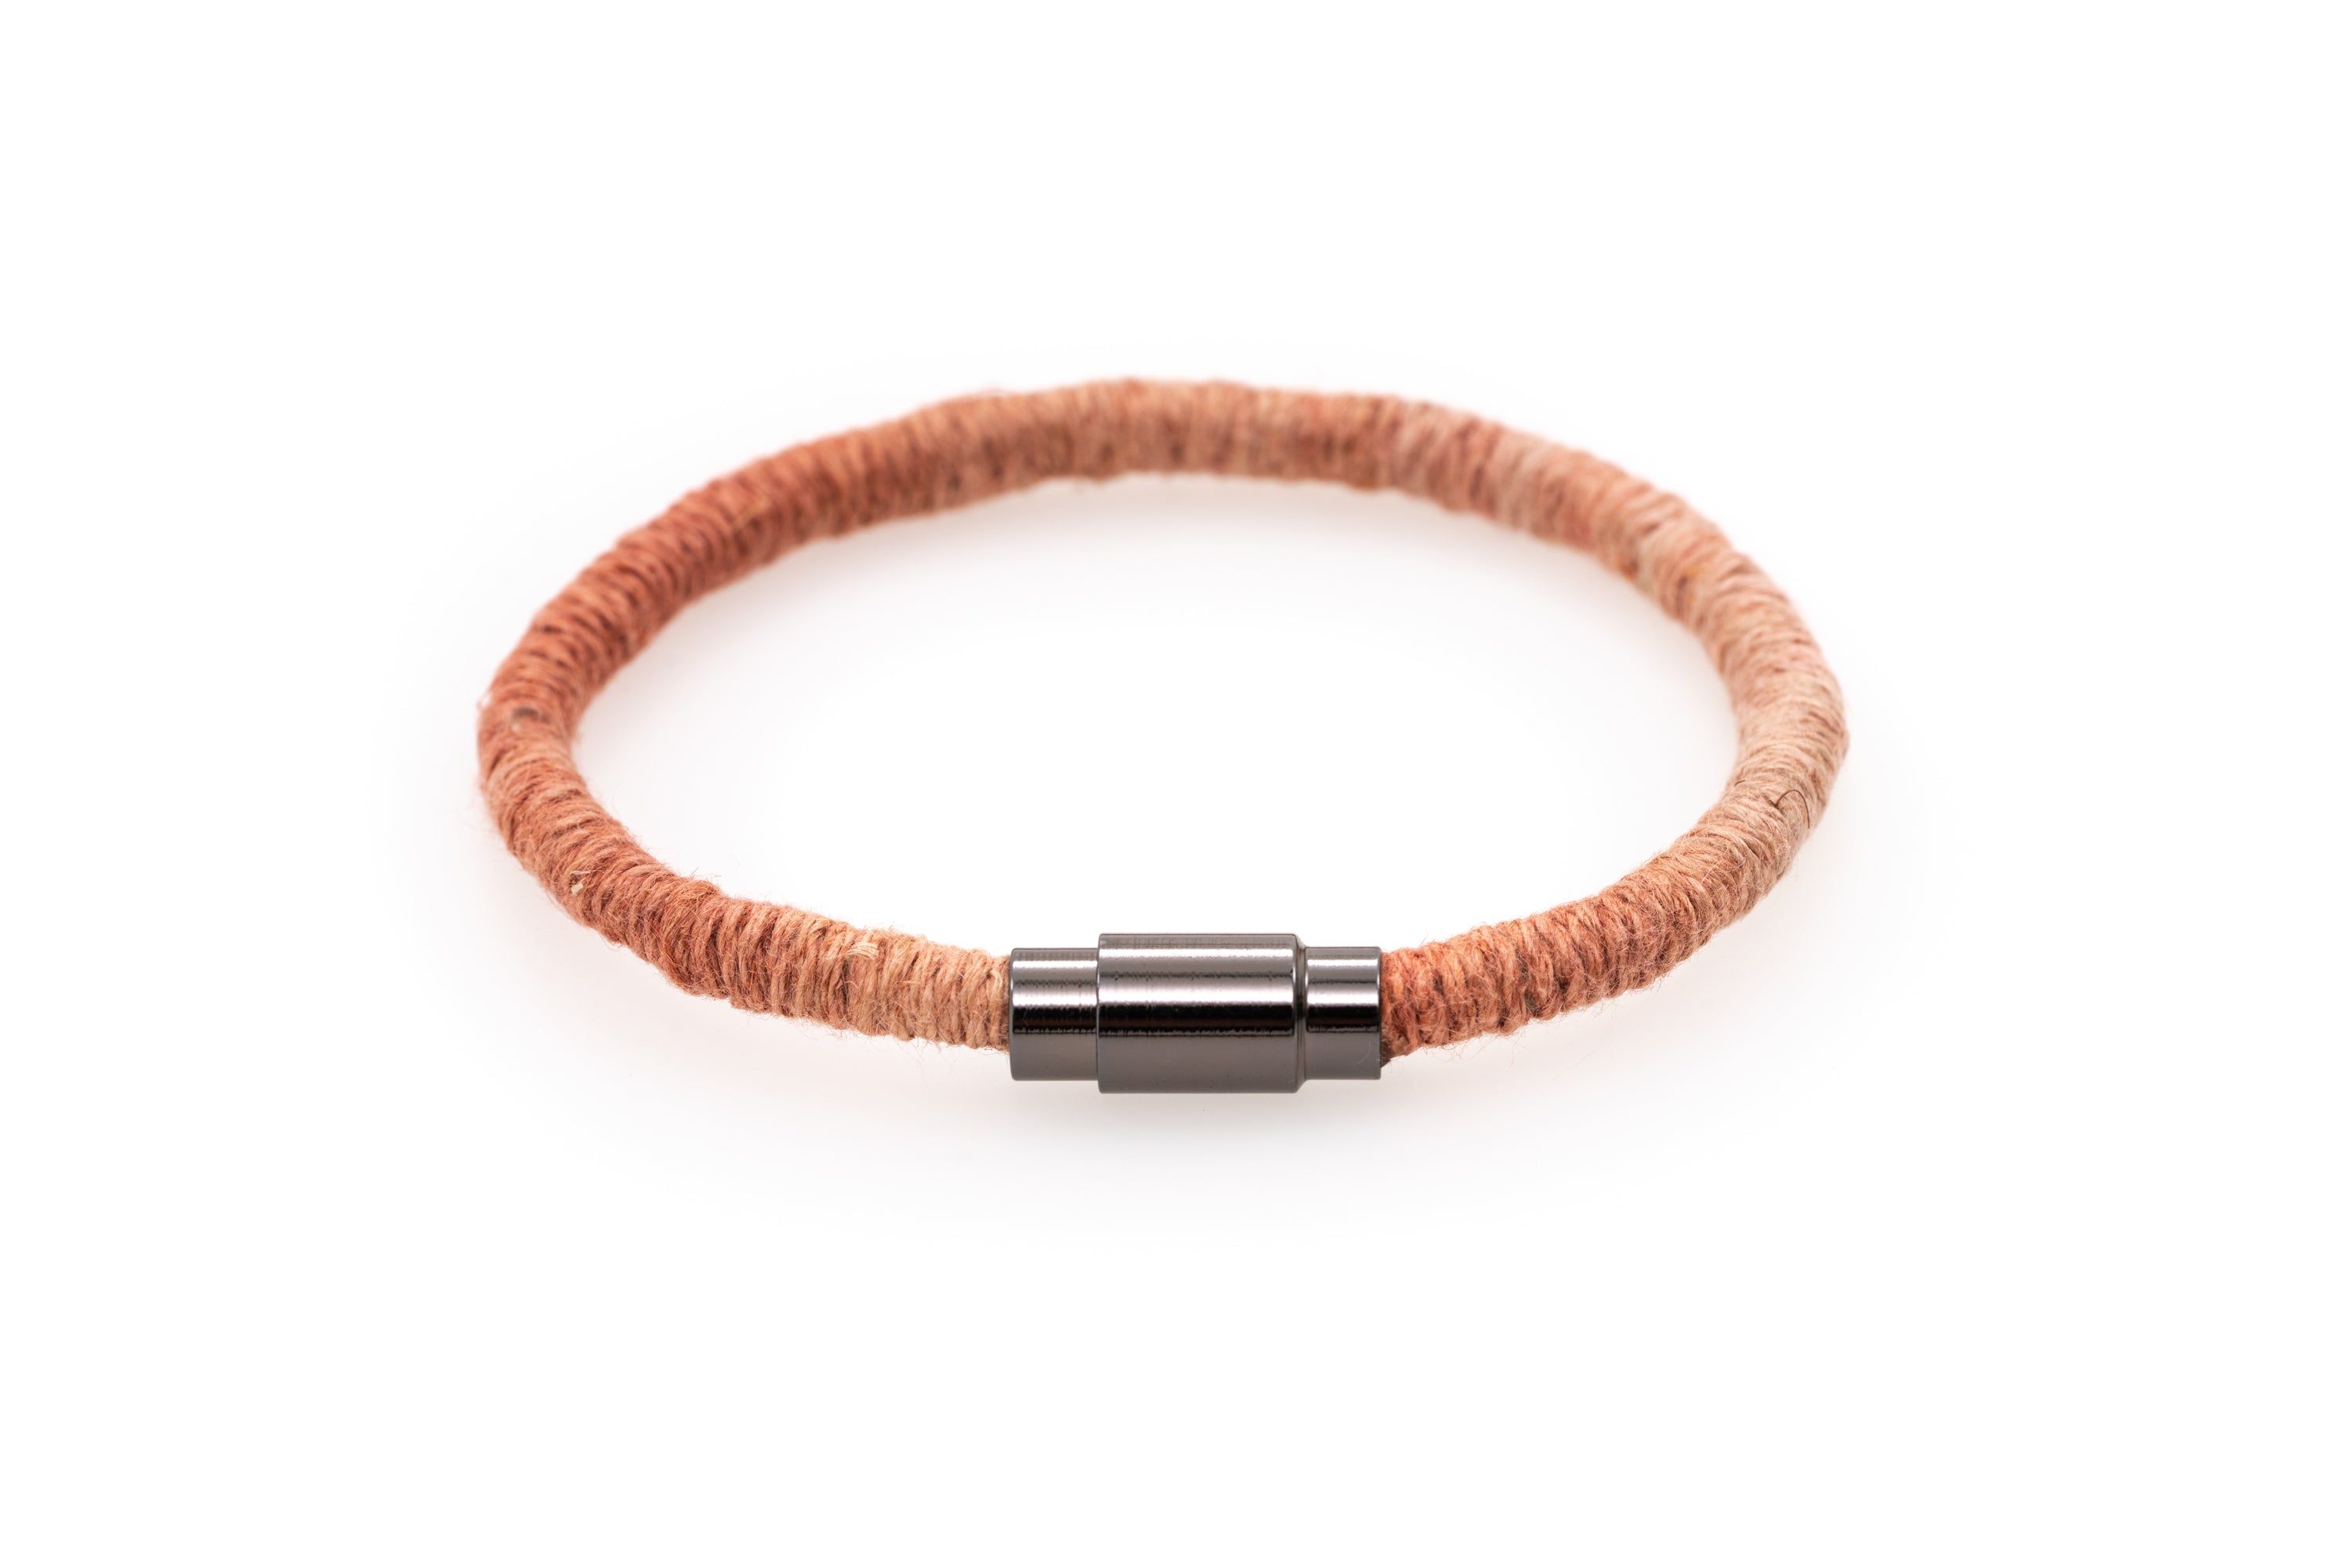 Fiber Art Jewelry Hemp Wrapped Bracelet Size L - Coral / Antiquated Patina Plated Magnet